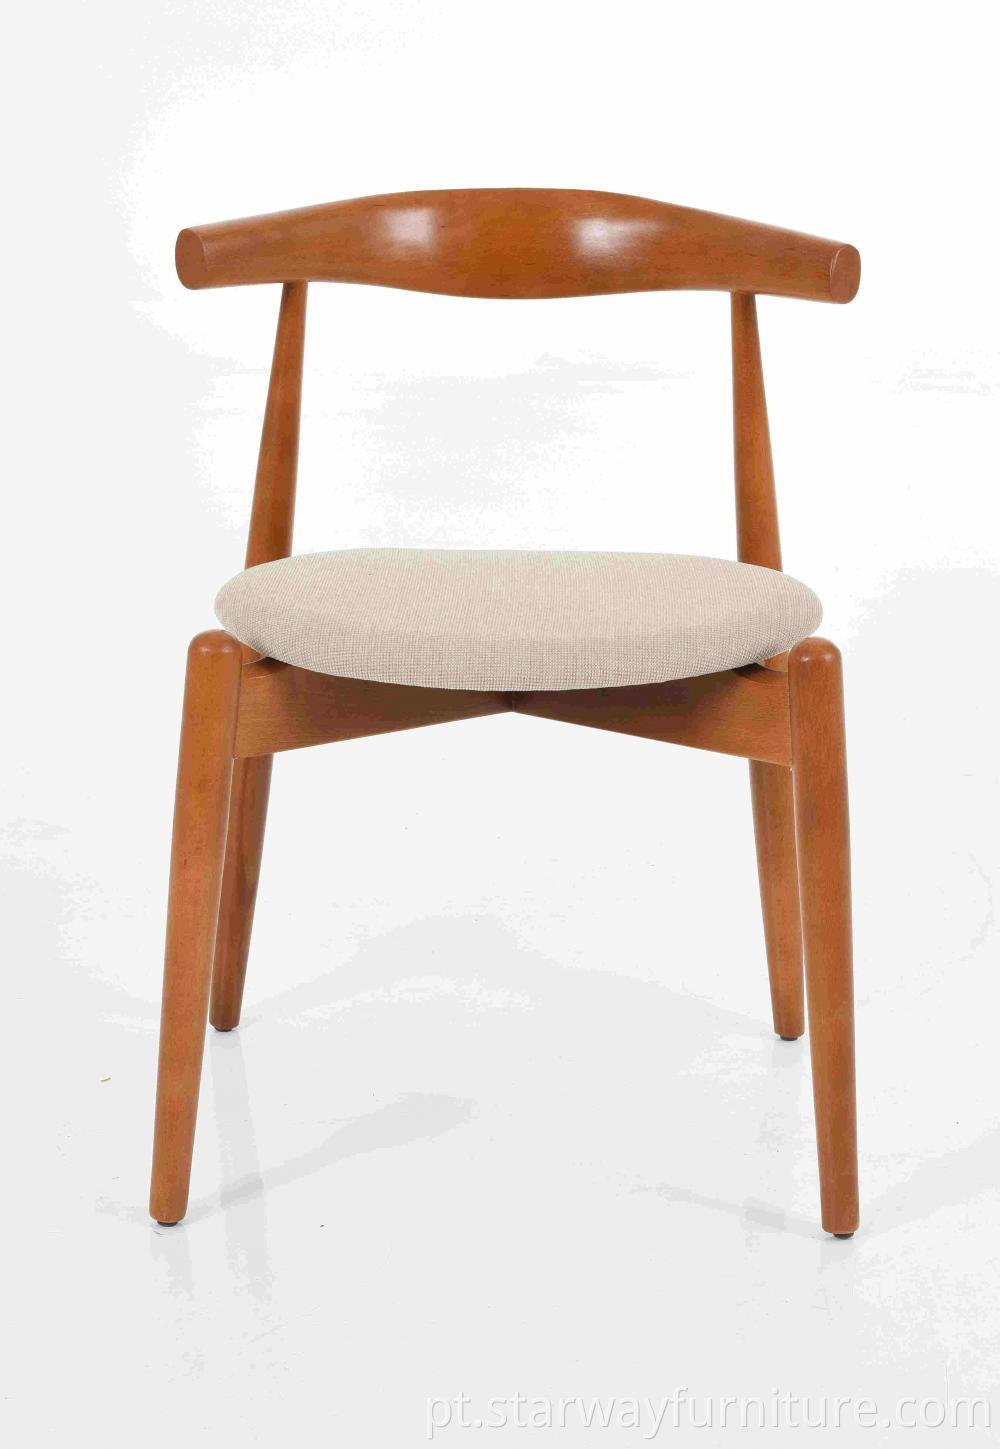 Ox Horn Chair